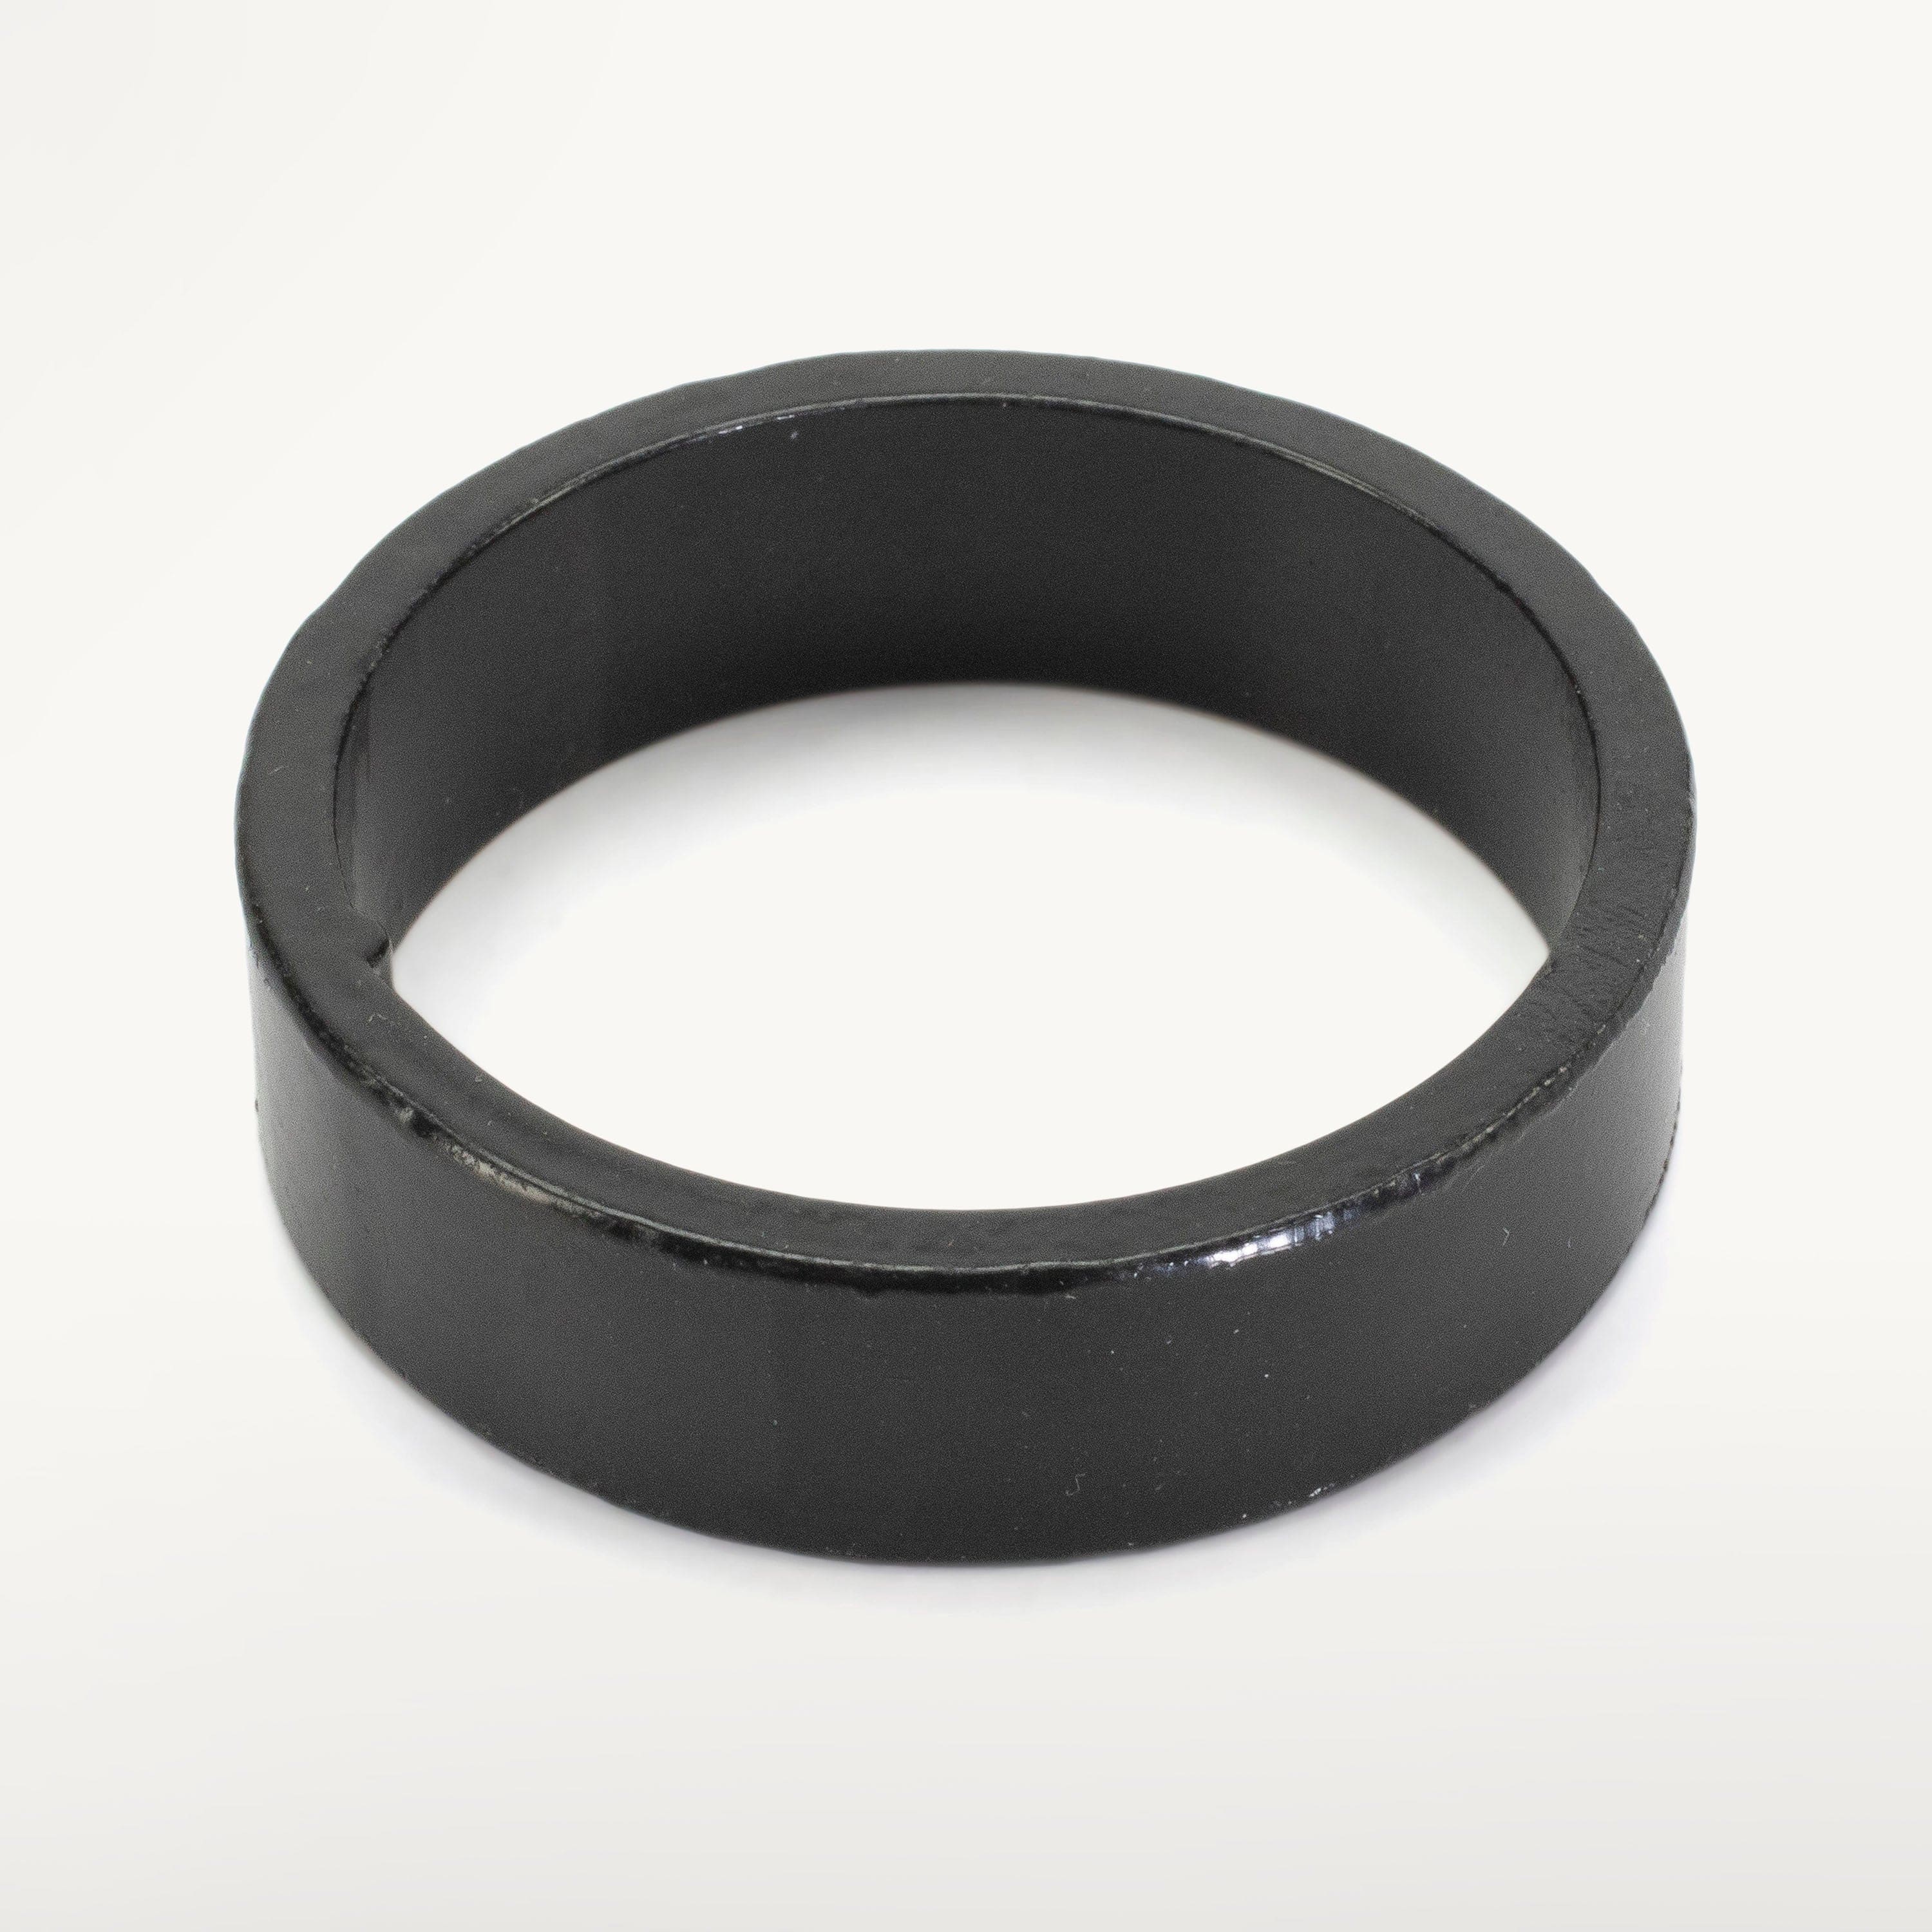 Kalifano Black Metal Ring Sphere Stand - 4 cm / 1.5" MS4